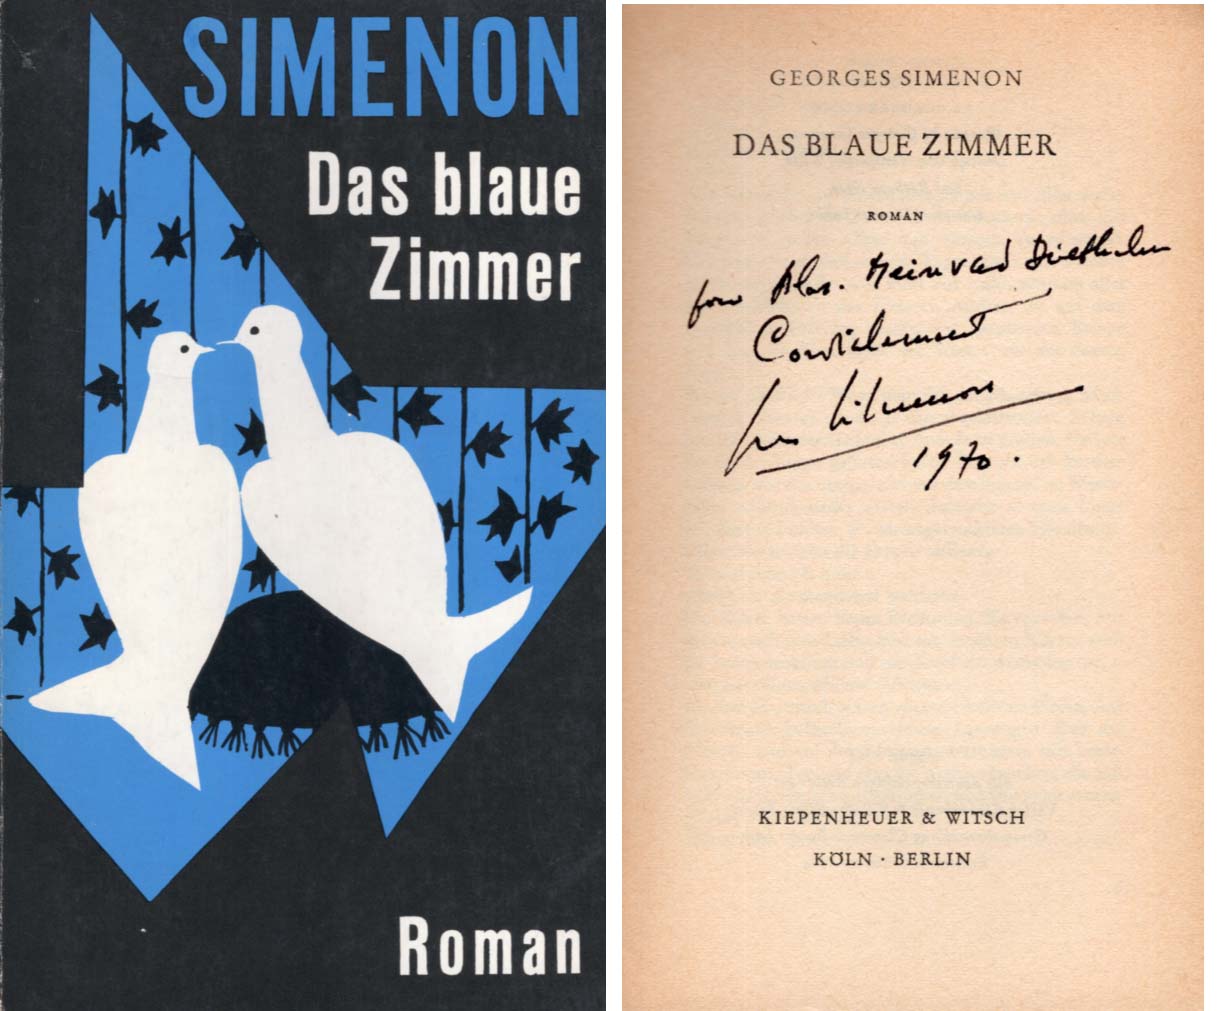 Georges Simenon Autograph Autogramm | ID 7791851864213